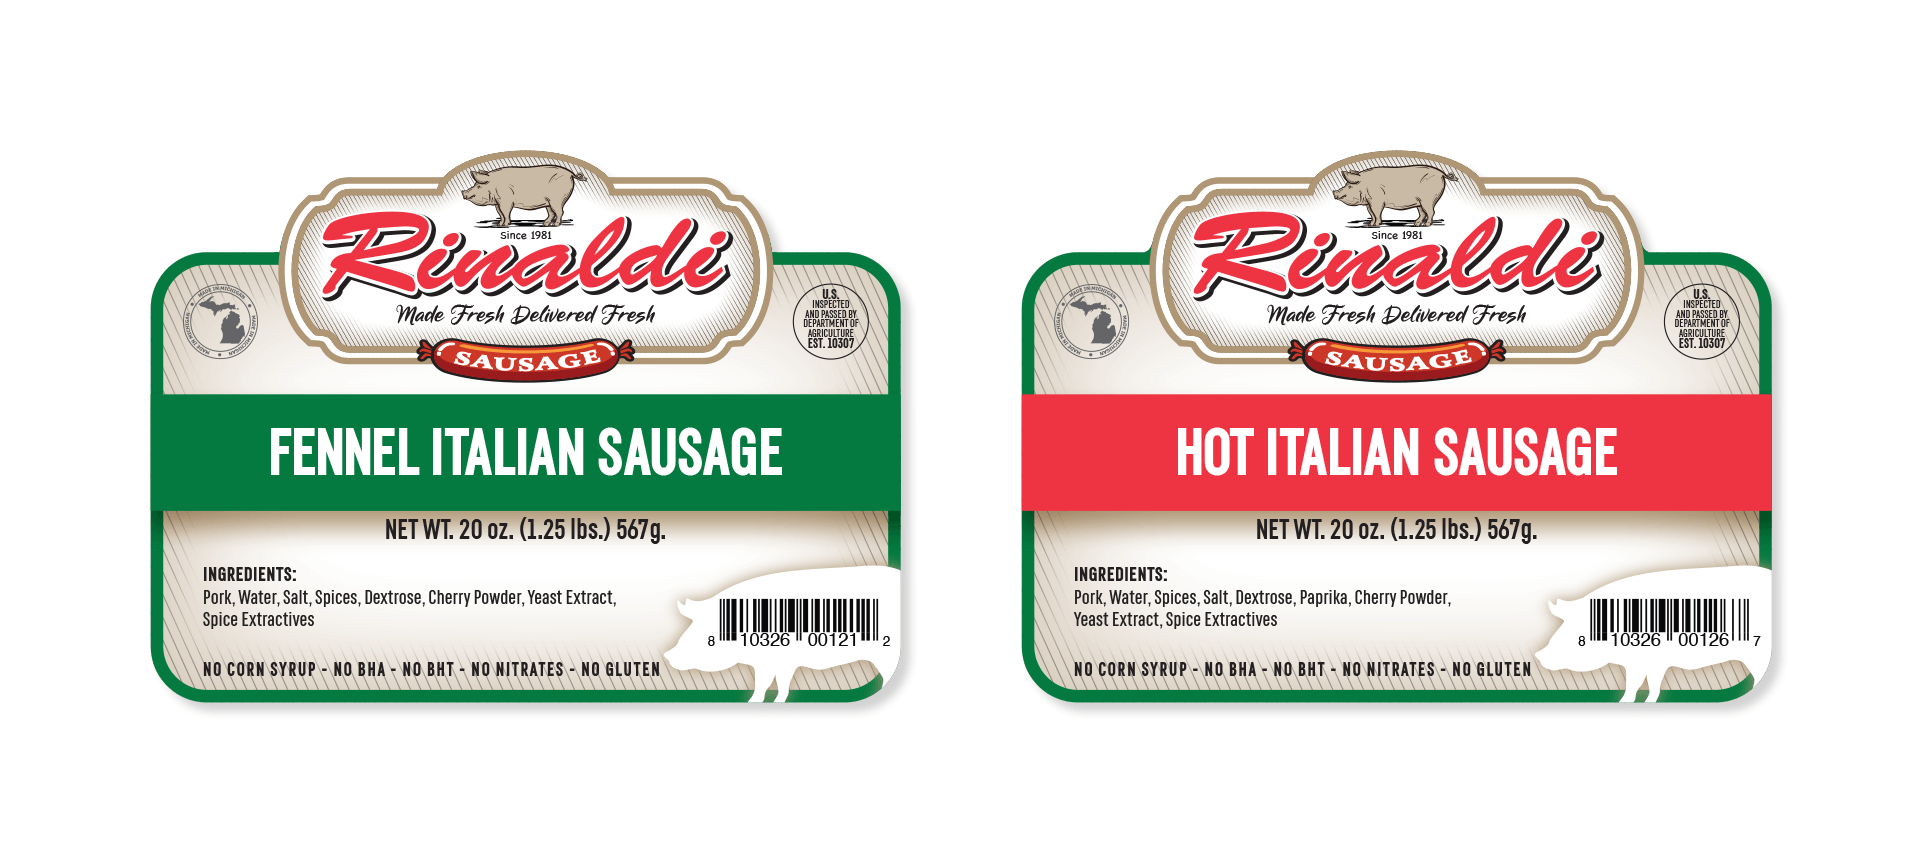 Packaging design, Rinaldi label Fennel Italian Sausage and Hot Italian Sausage